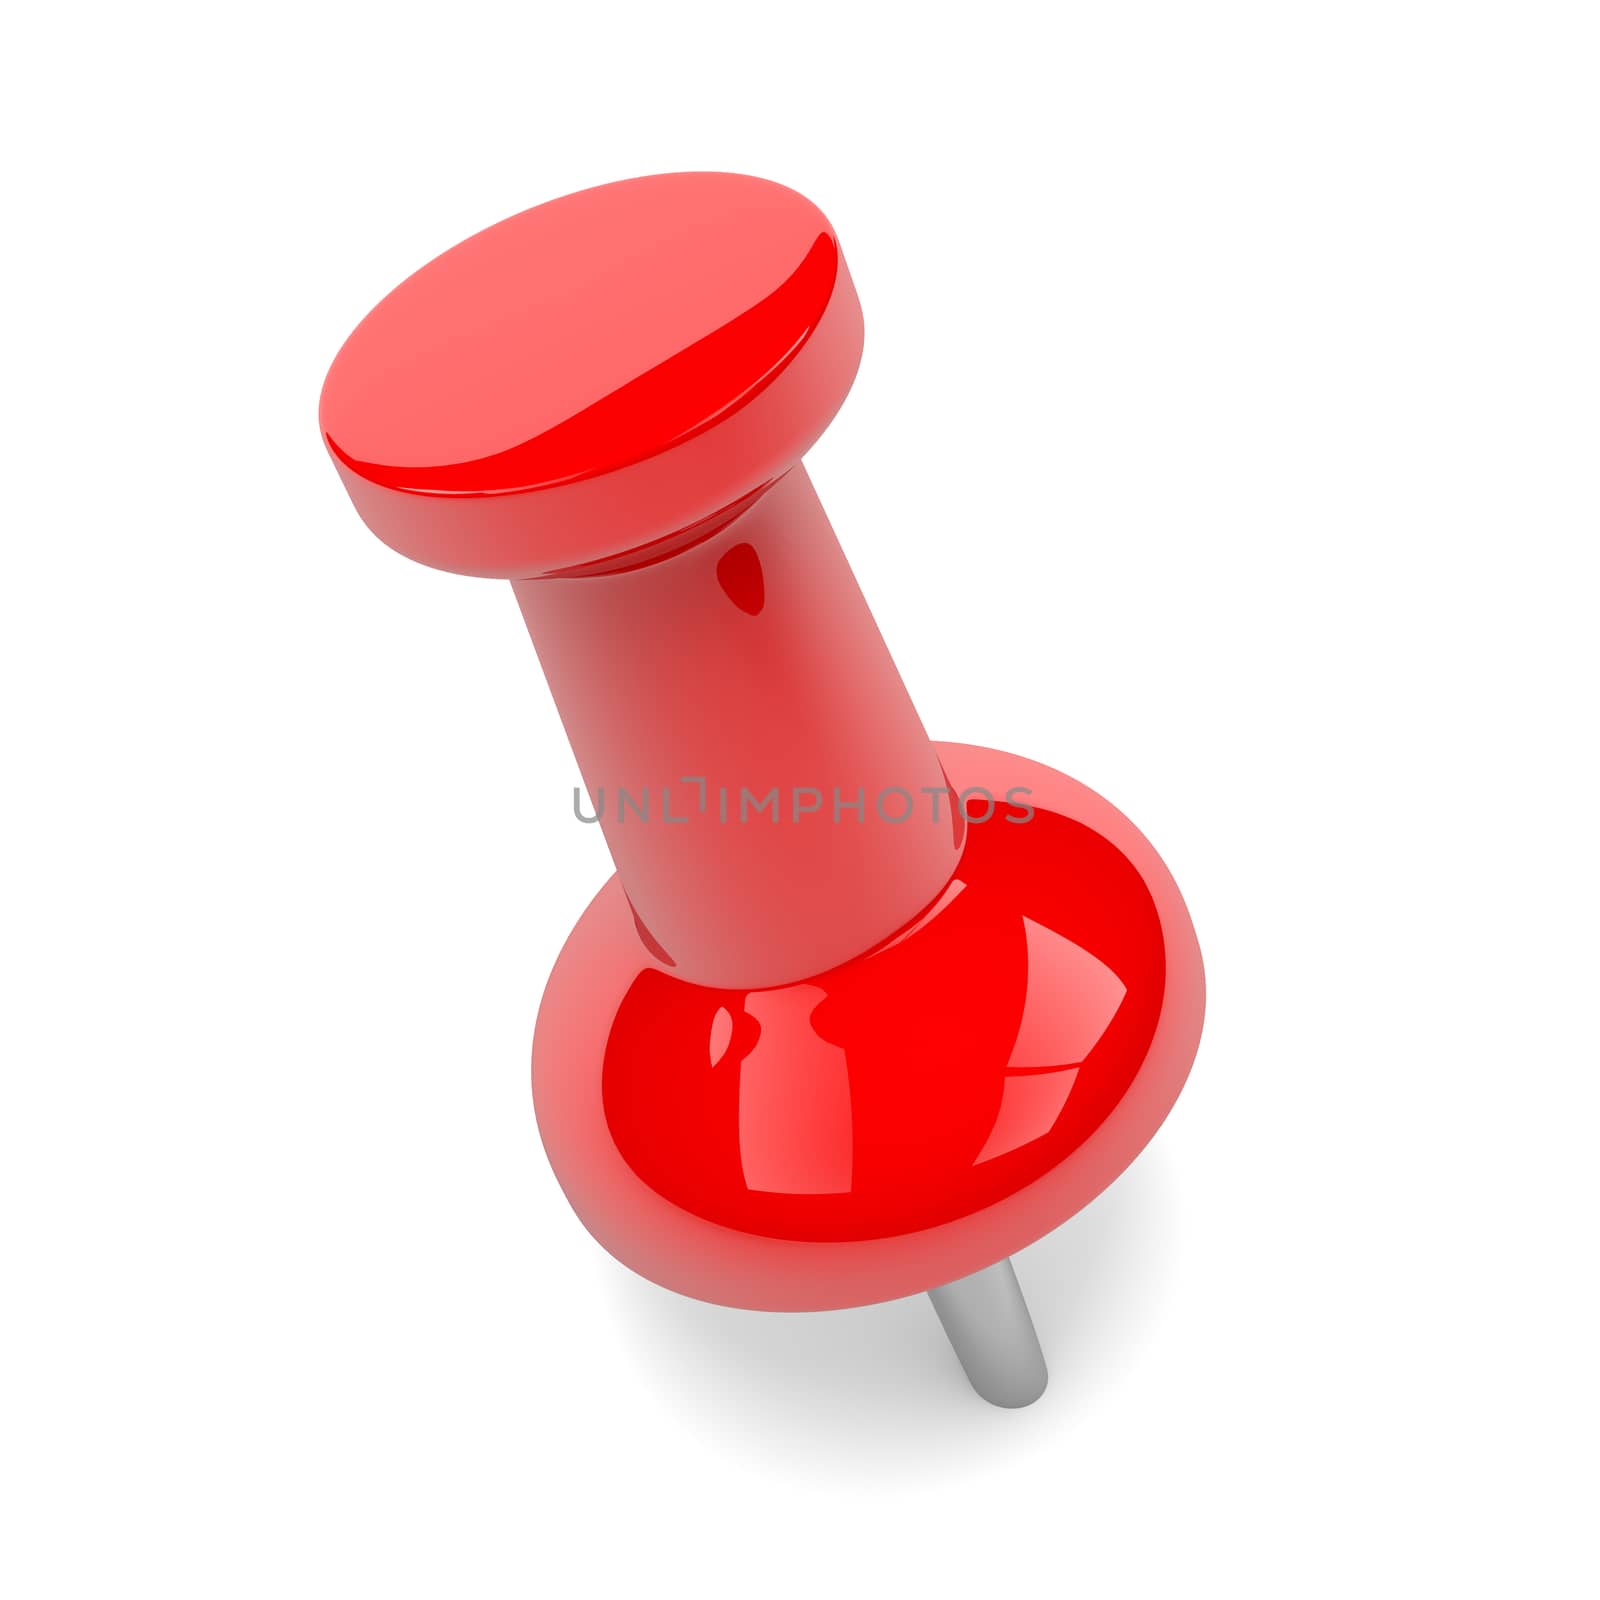 Single Red Pushpin Isolated on White Background